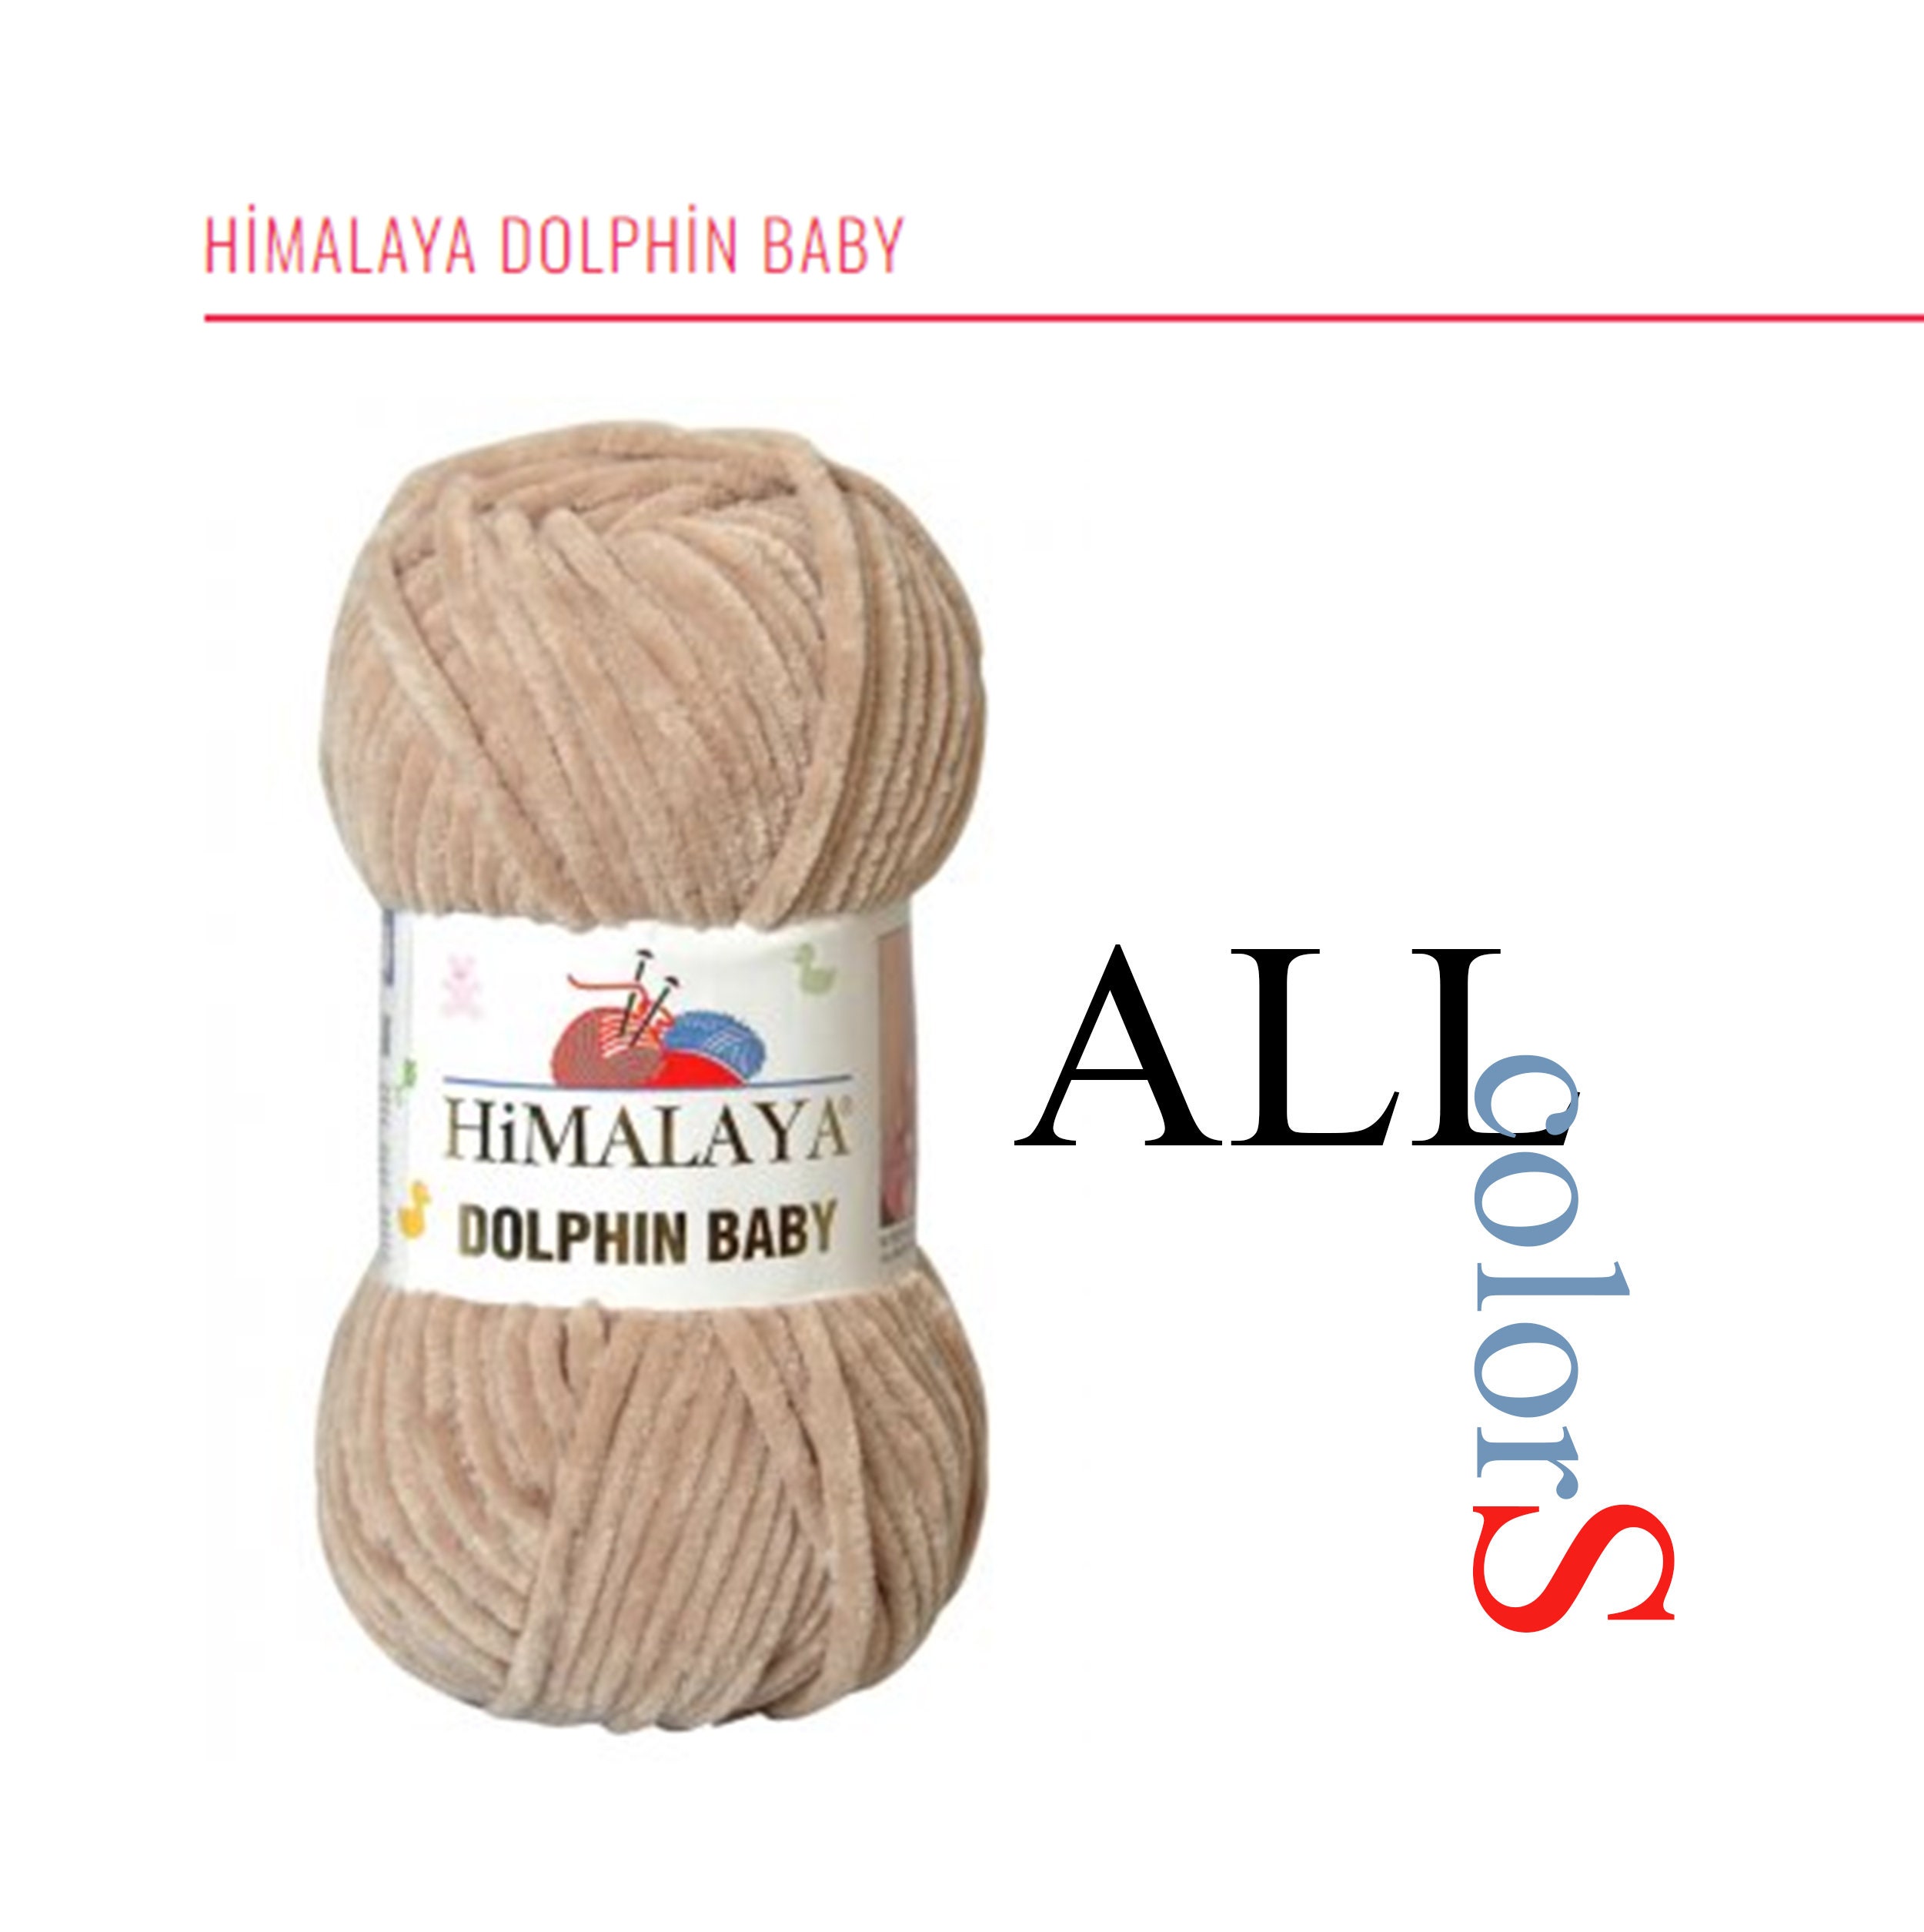 Dolphin Baby micro polyester knitting yarn - Himalaya - 25, 100 g, 120 m